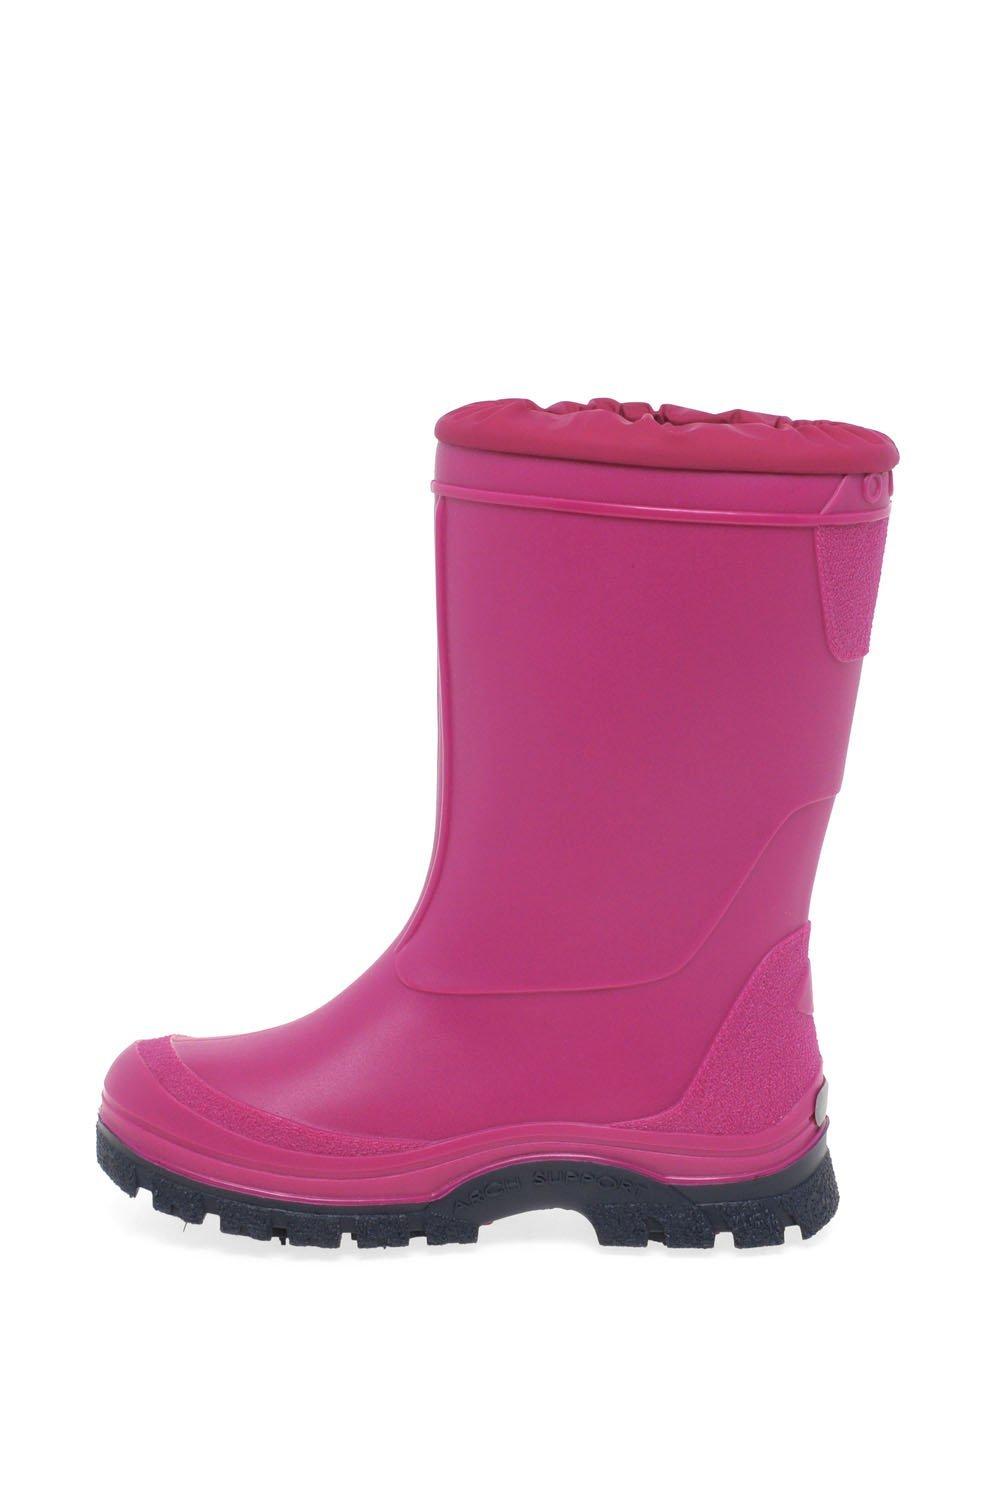 Target Dry Girls Kids Waterproof Rain Wellie Welly Wellington Boots RRP £21.50